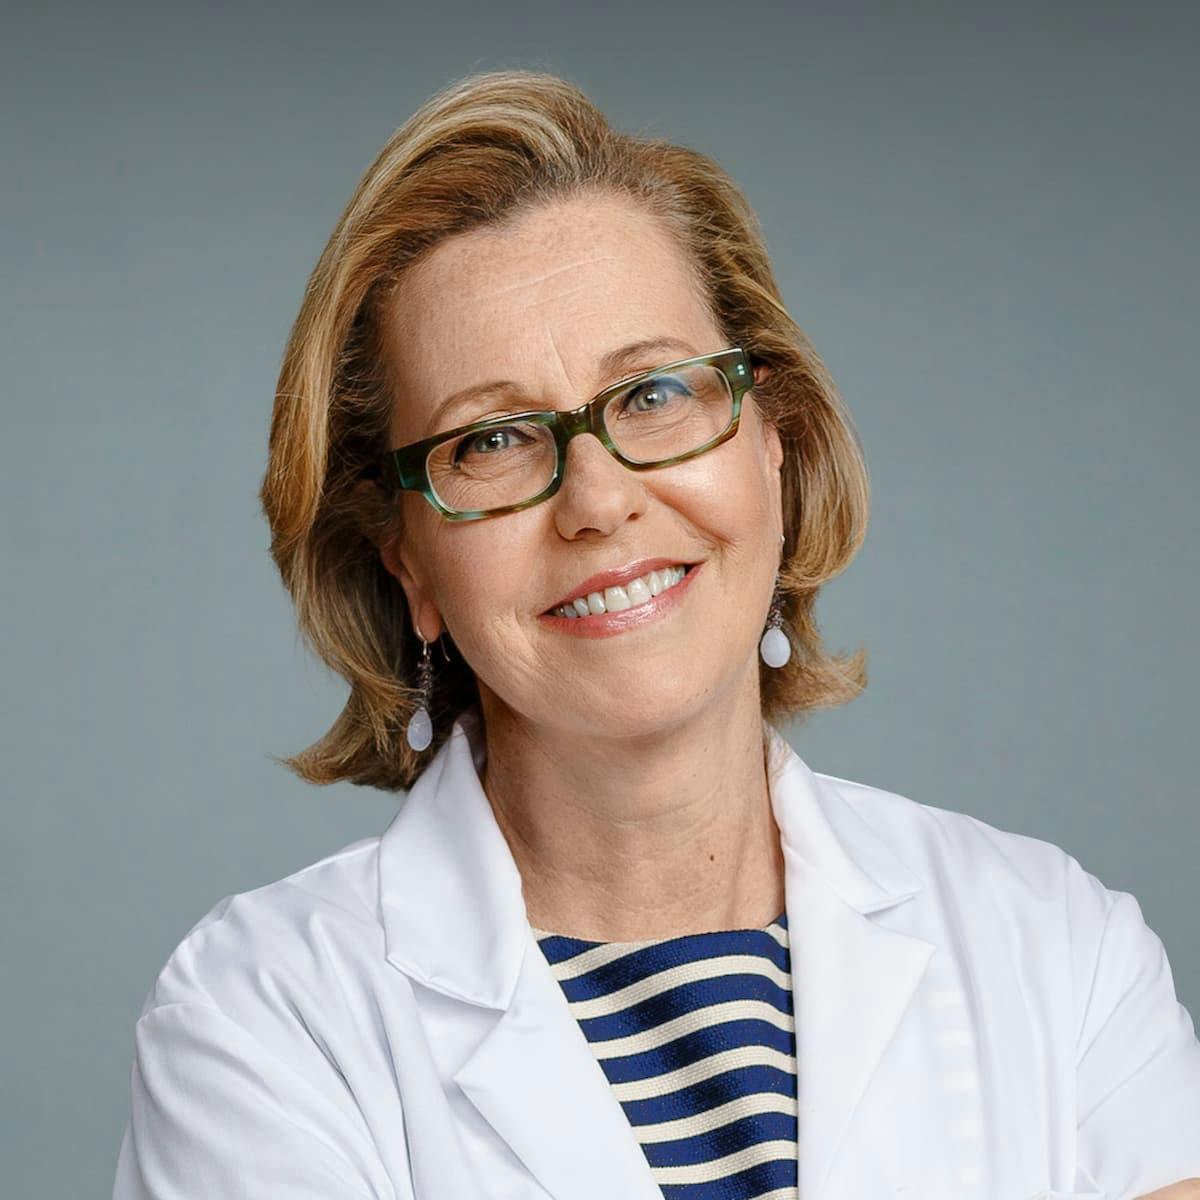 Deborah M. Axelrod, MD, Breast Cancer Surgeon at NYU Langone’s Perlmutter Cancer Center